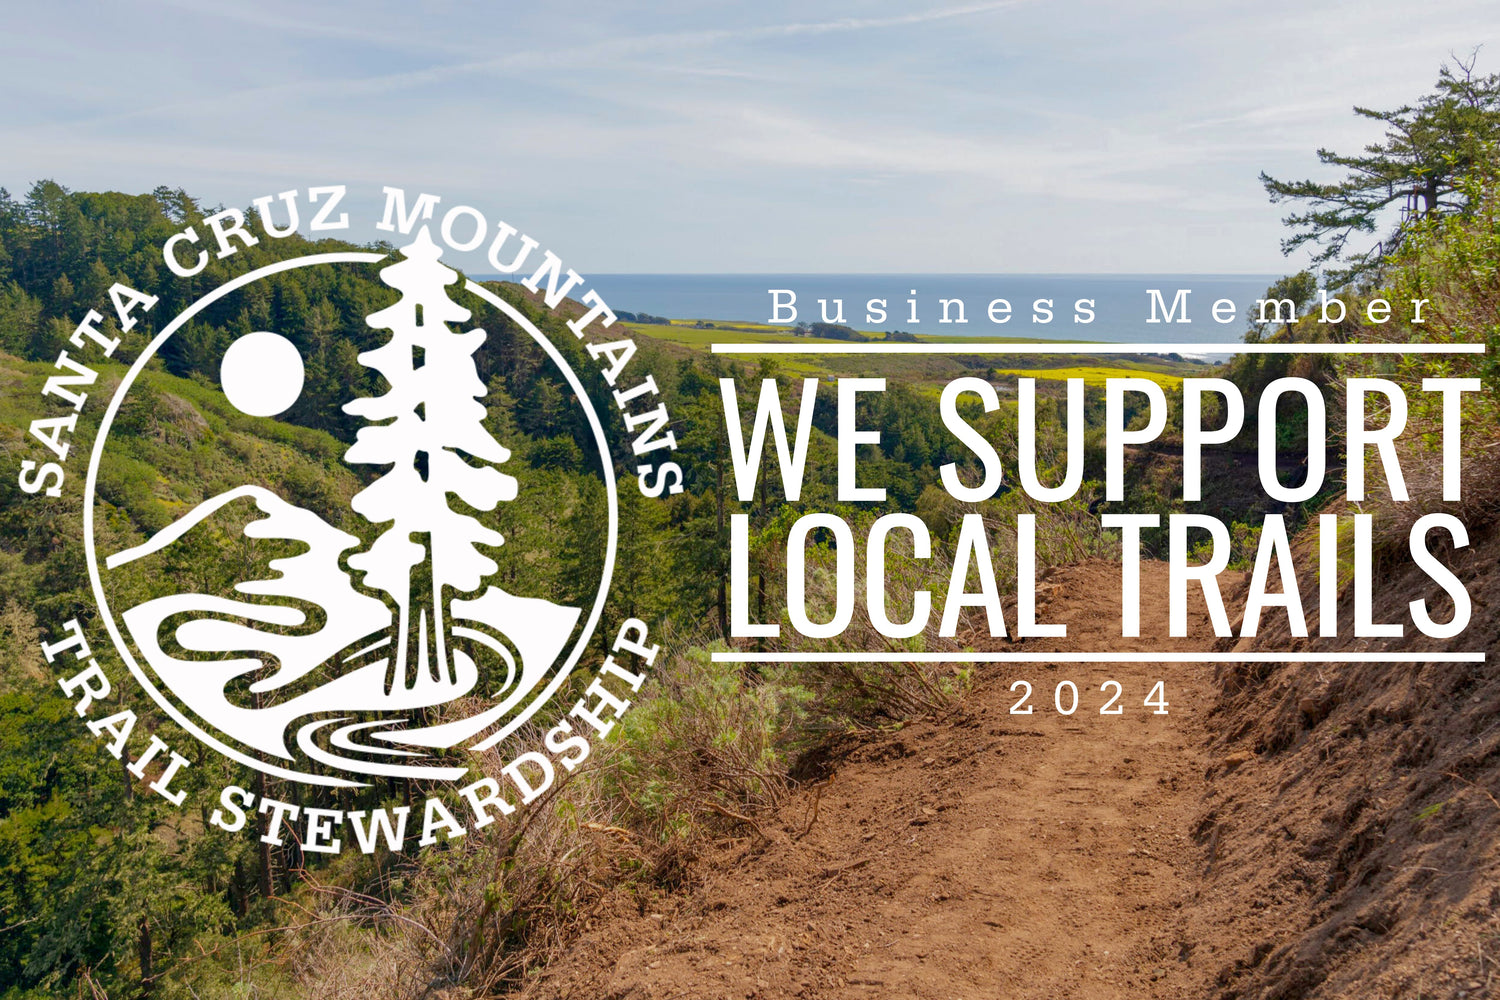 Santa Cruz Mountain Trail Stewardship Business Member in 2024